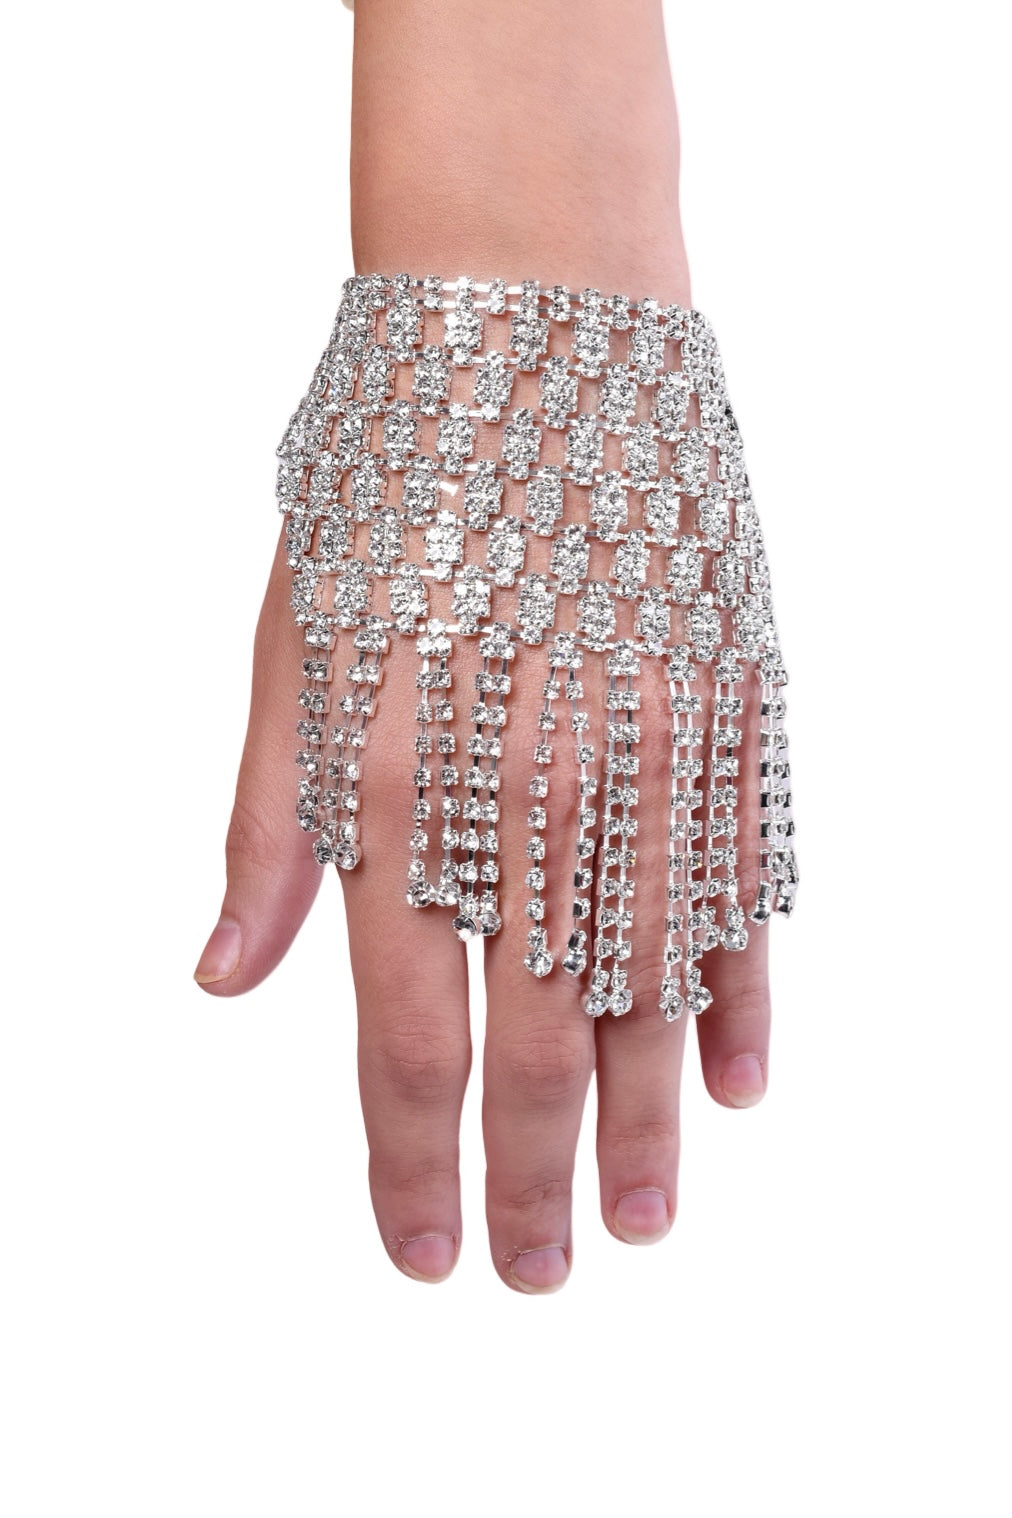 Silver Diamond Rhinestone Hand Glove